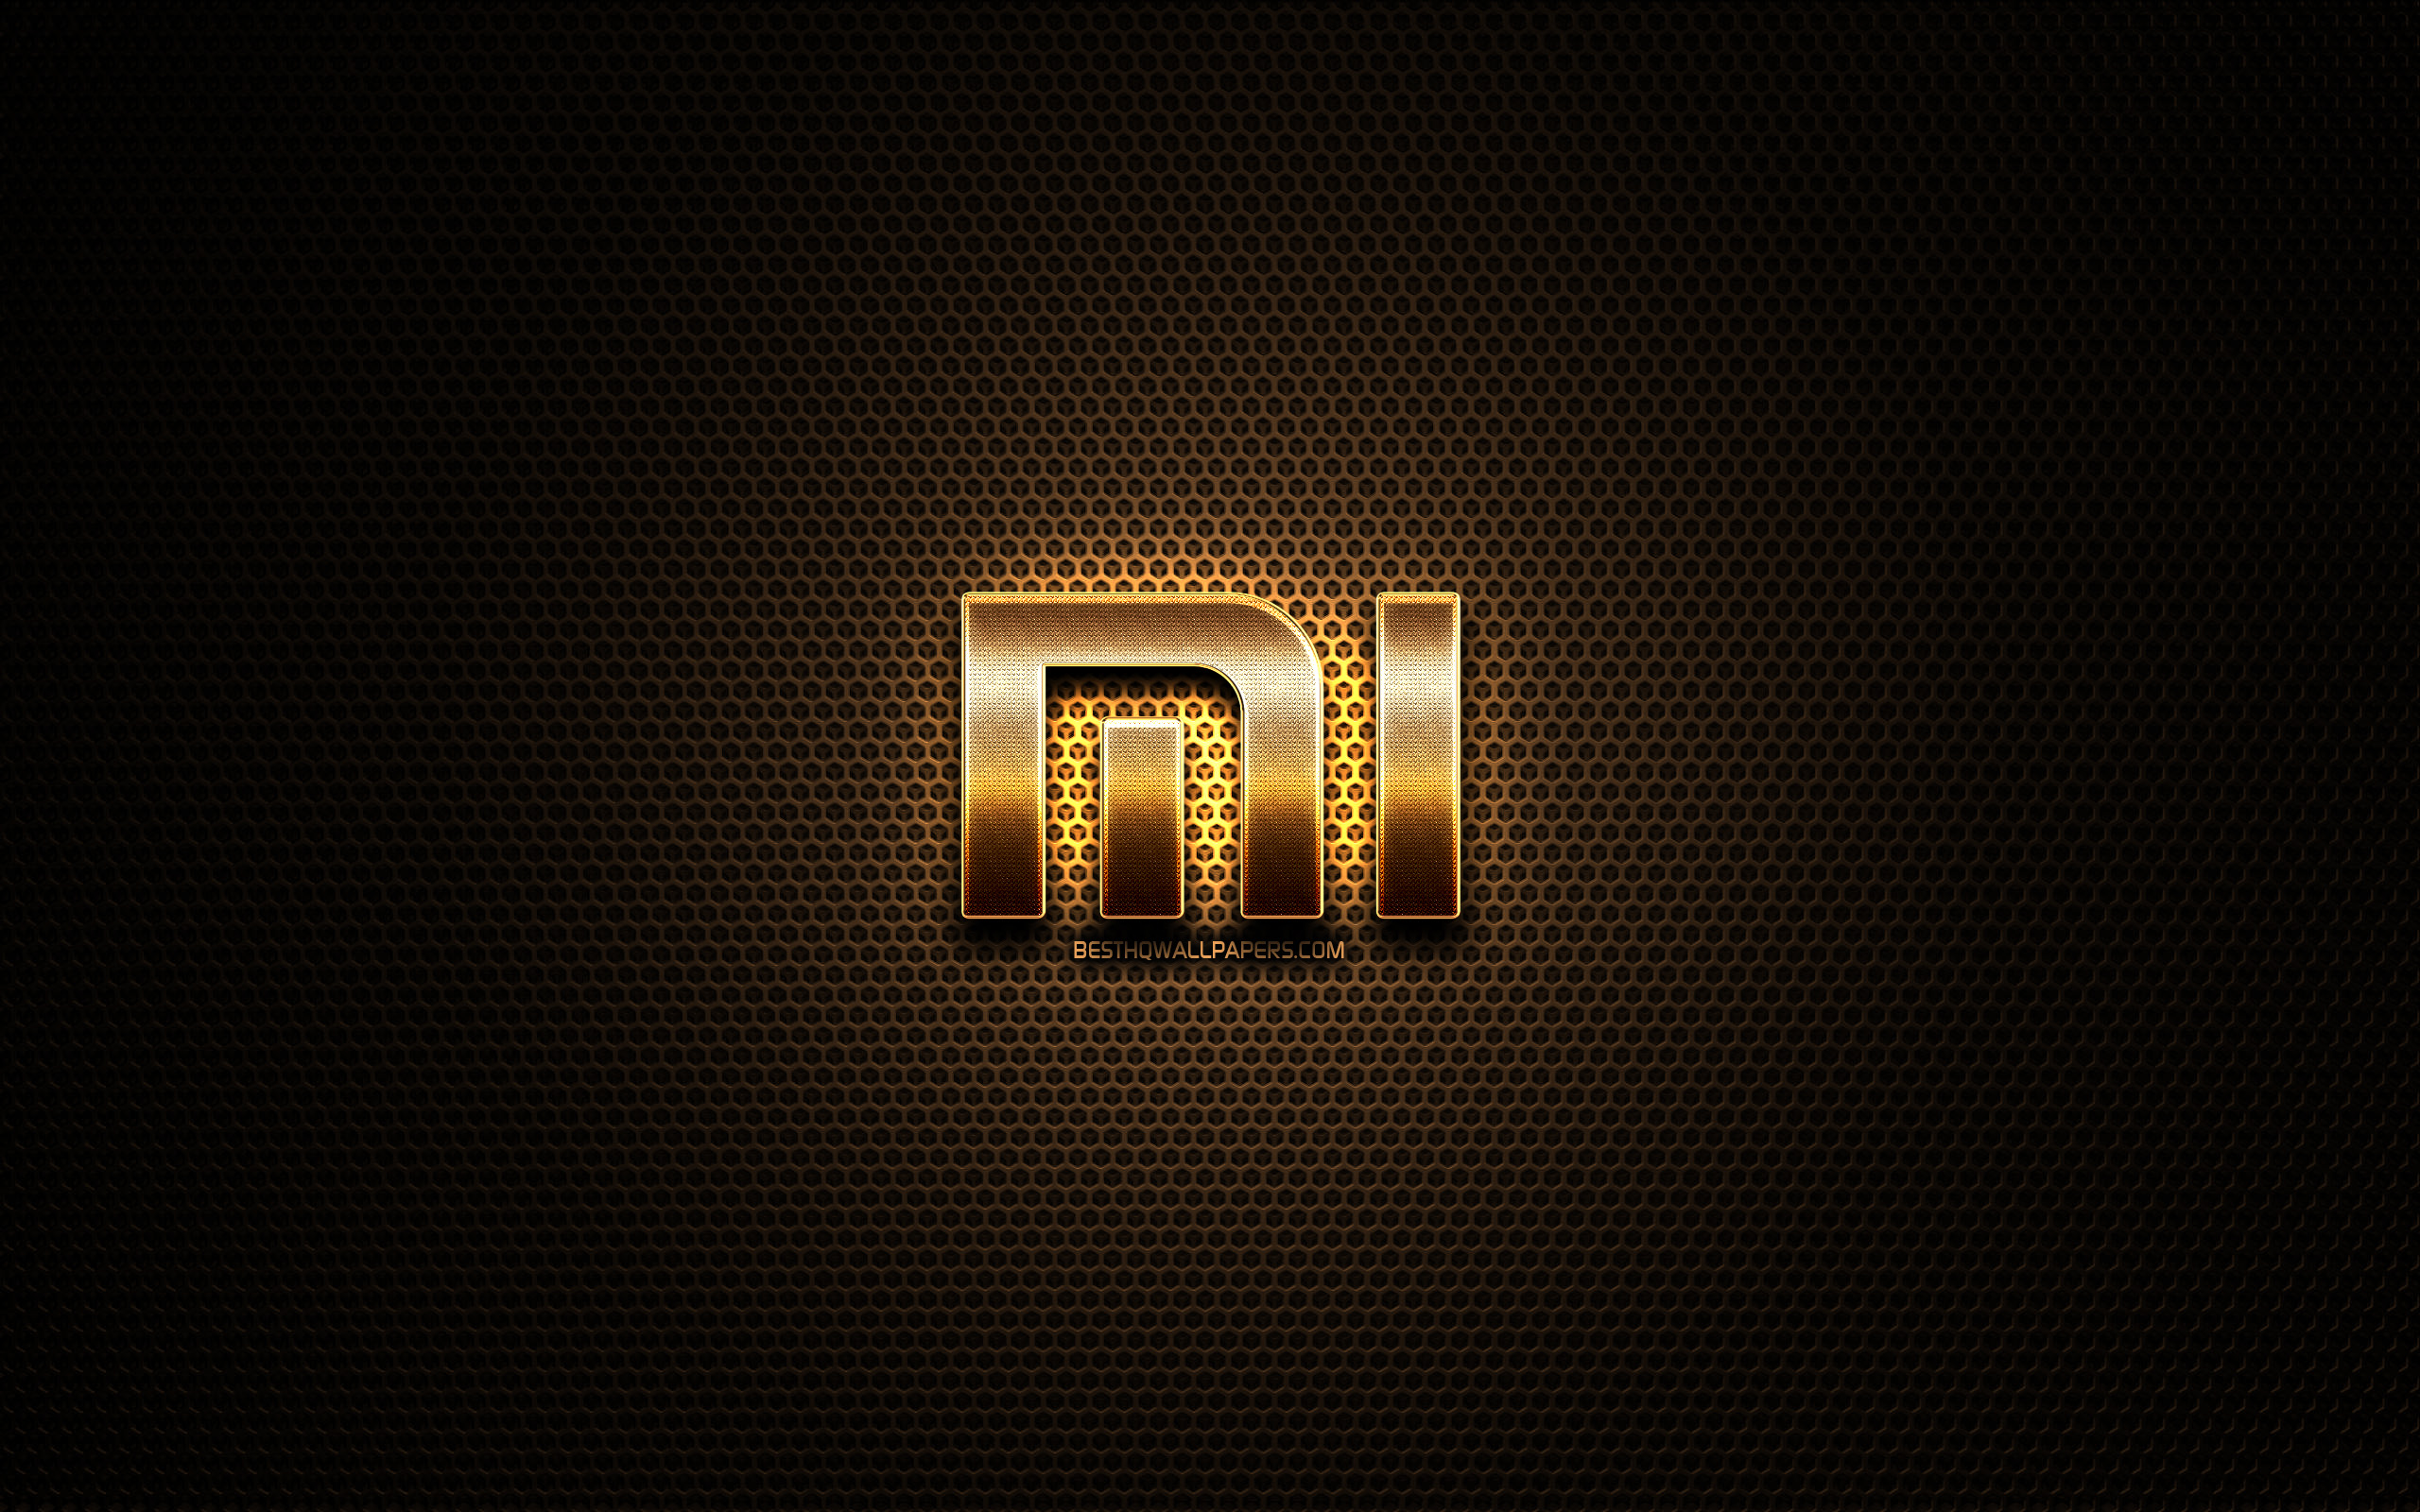 Www mi com global. Логотип Сяоми редми. Сяоми надпись. Красивый логотип Xiaomi. Обои с логотипом Xiaomi.